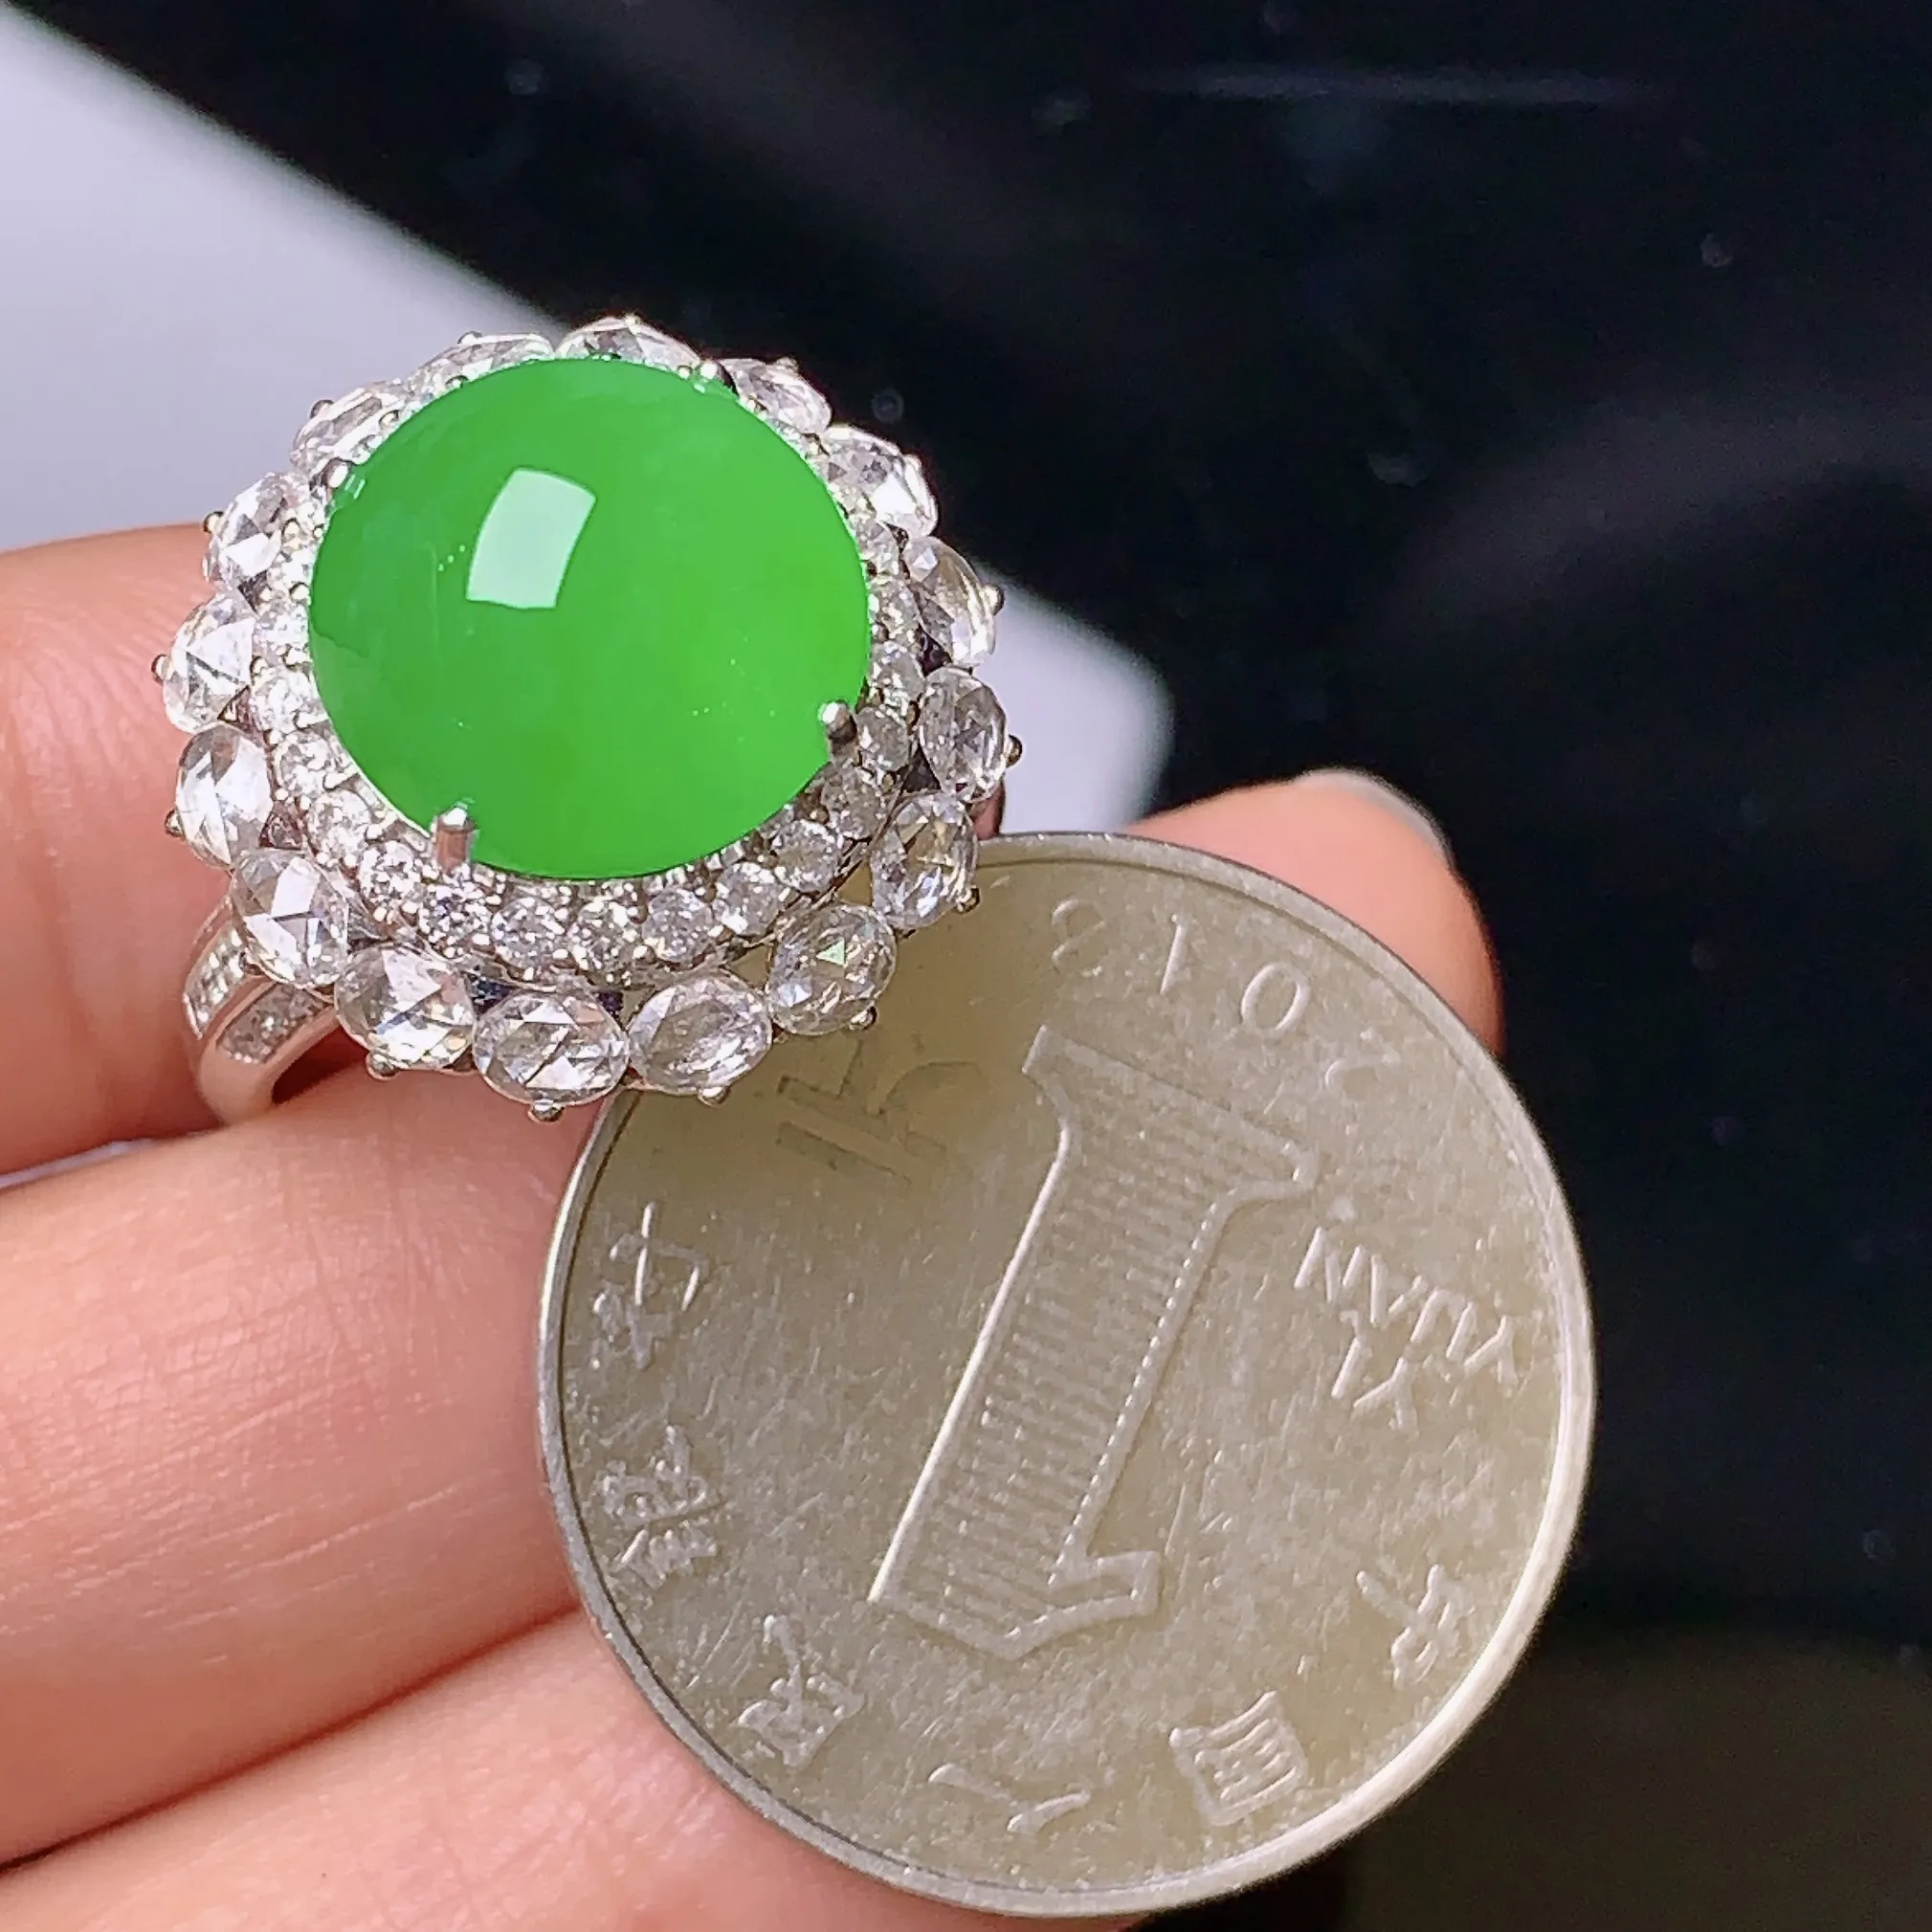 18k金钻镶嵌满绿蛋面戒指 玉质细腻 色泽艳丽 款式新颖时尚唯美 圈口14 整体尺寸18.3*14.5